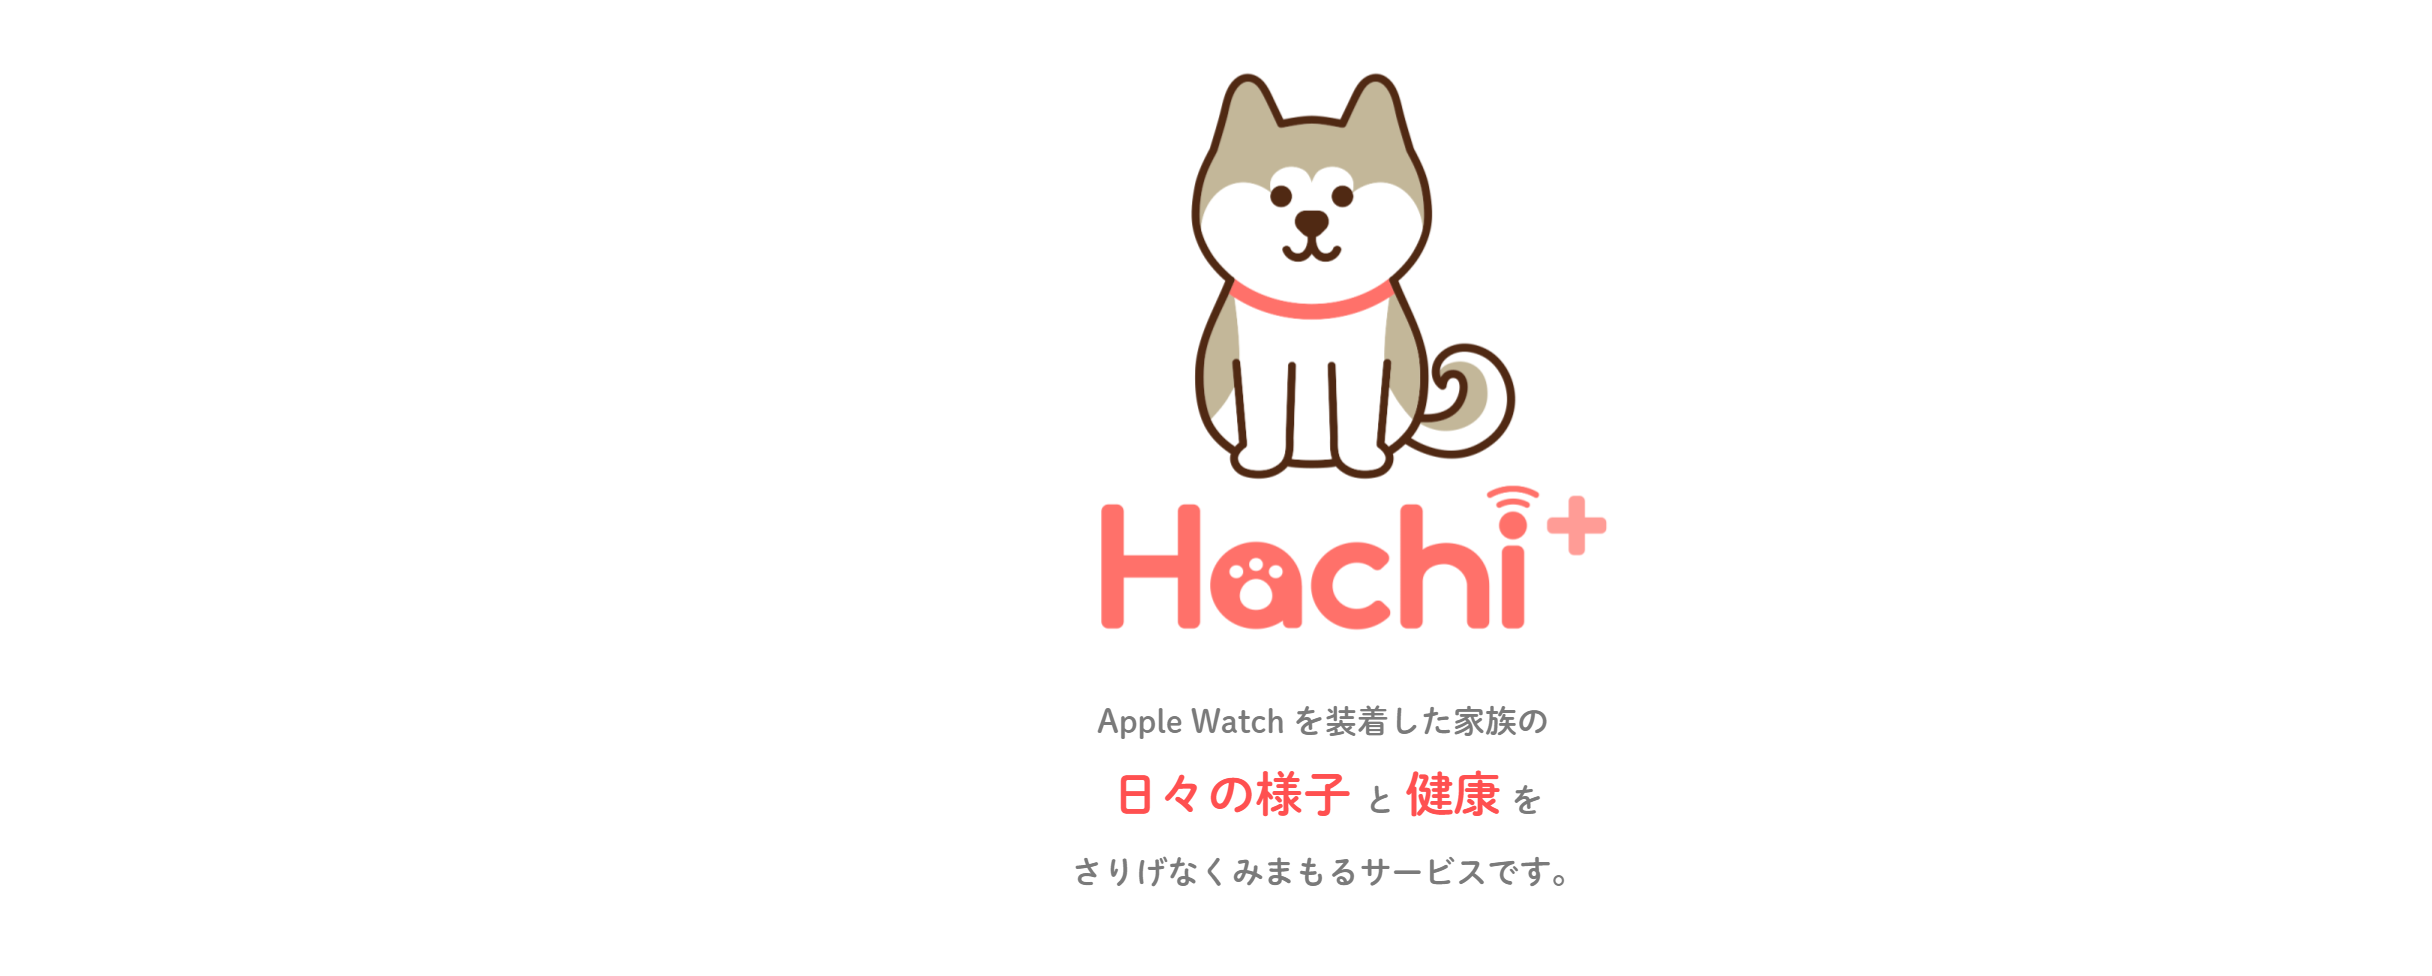 AP TECH株式会社の共有アプリ｢Hachi｣をご紹介